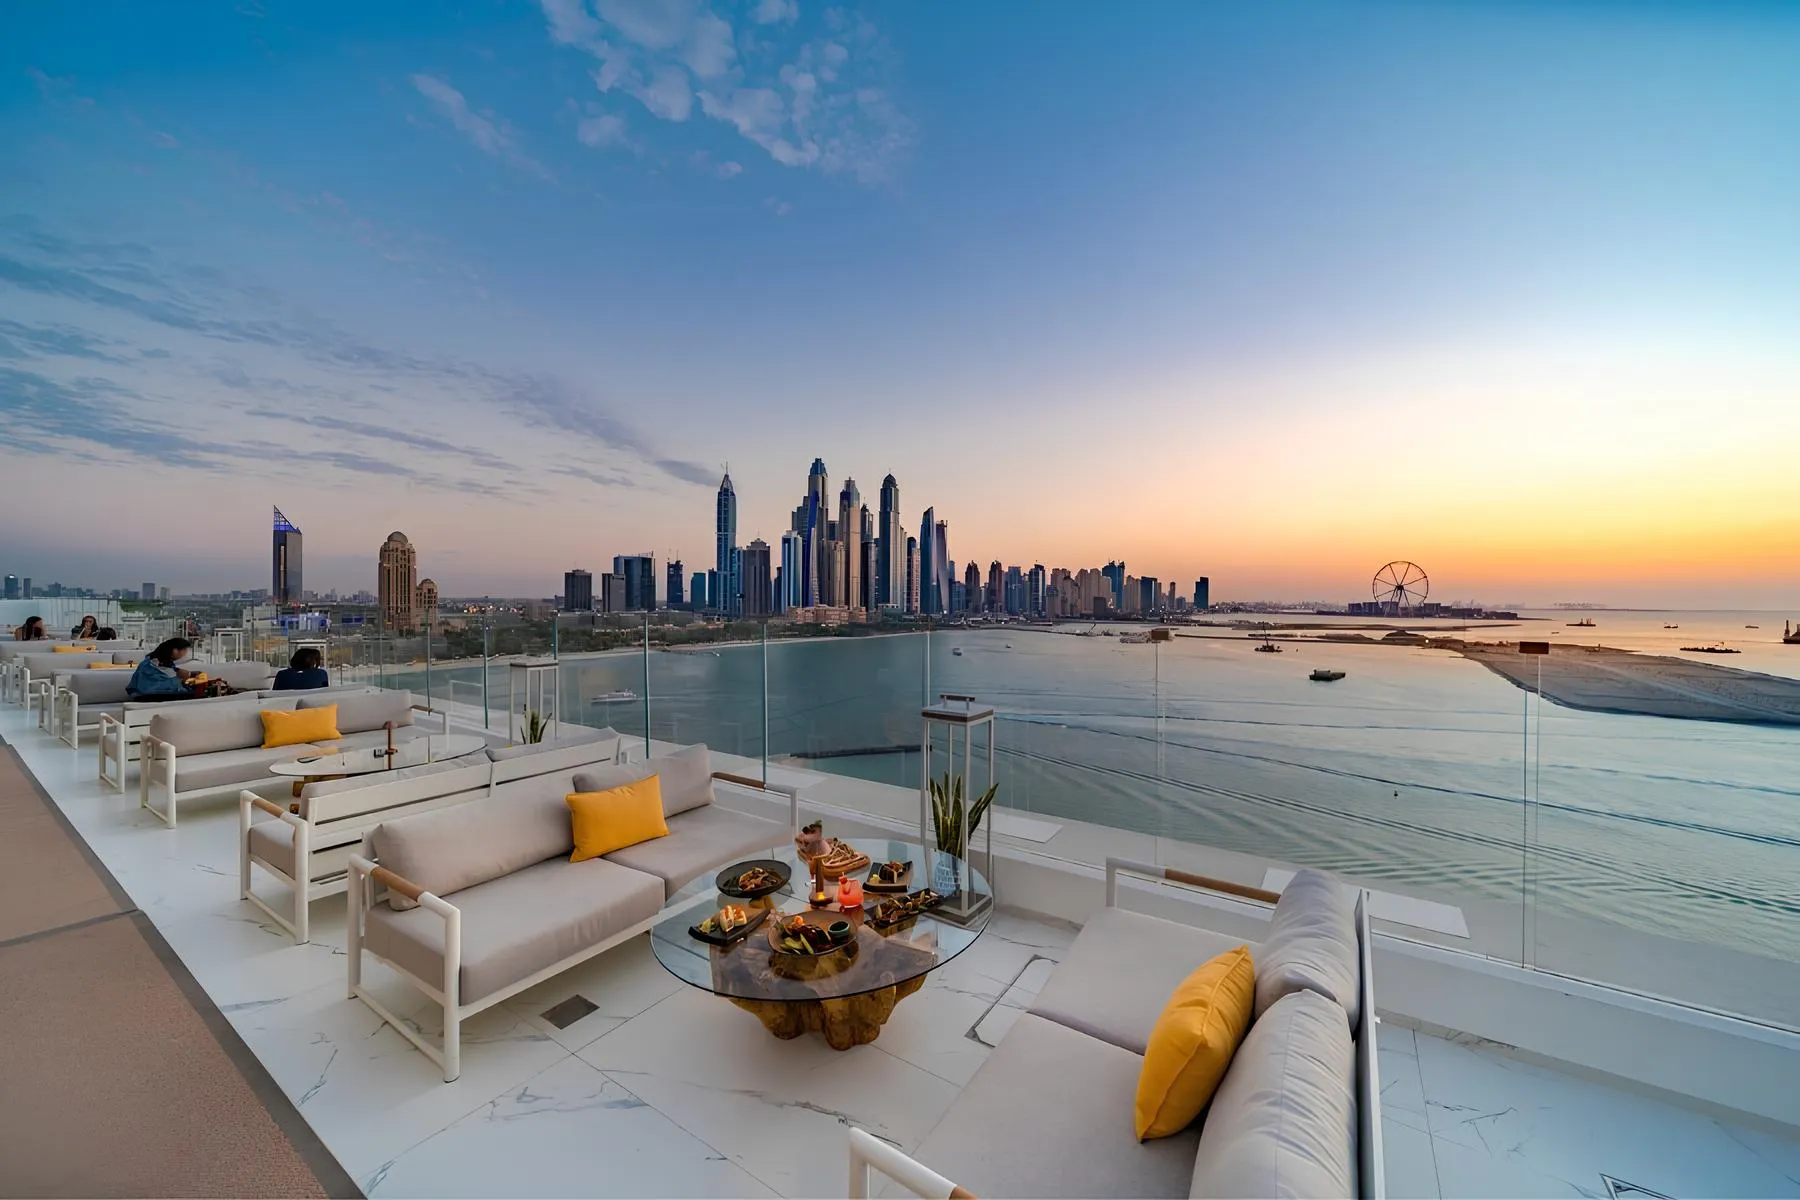 sundowner deals to try in Dubai